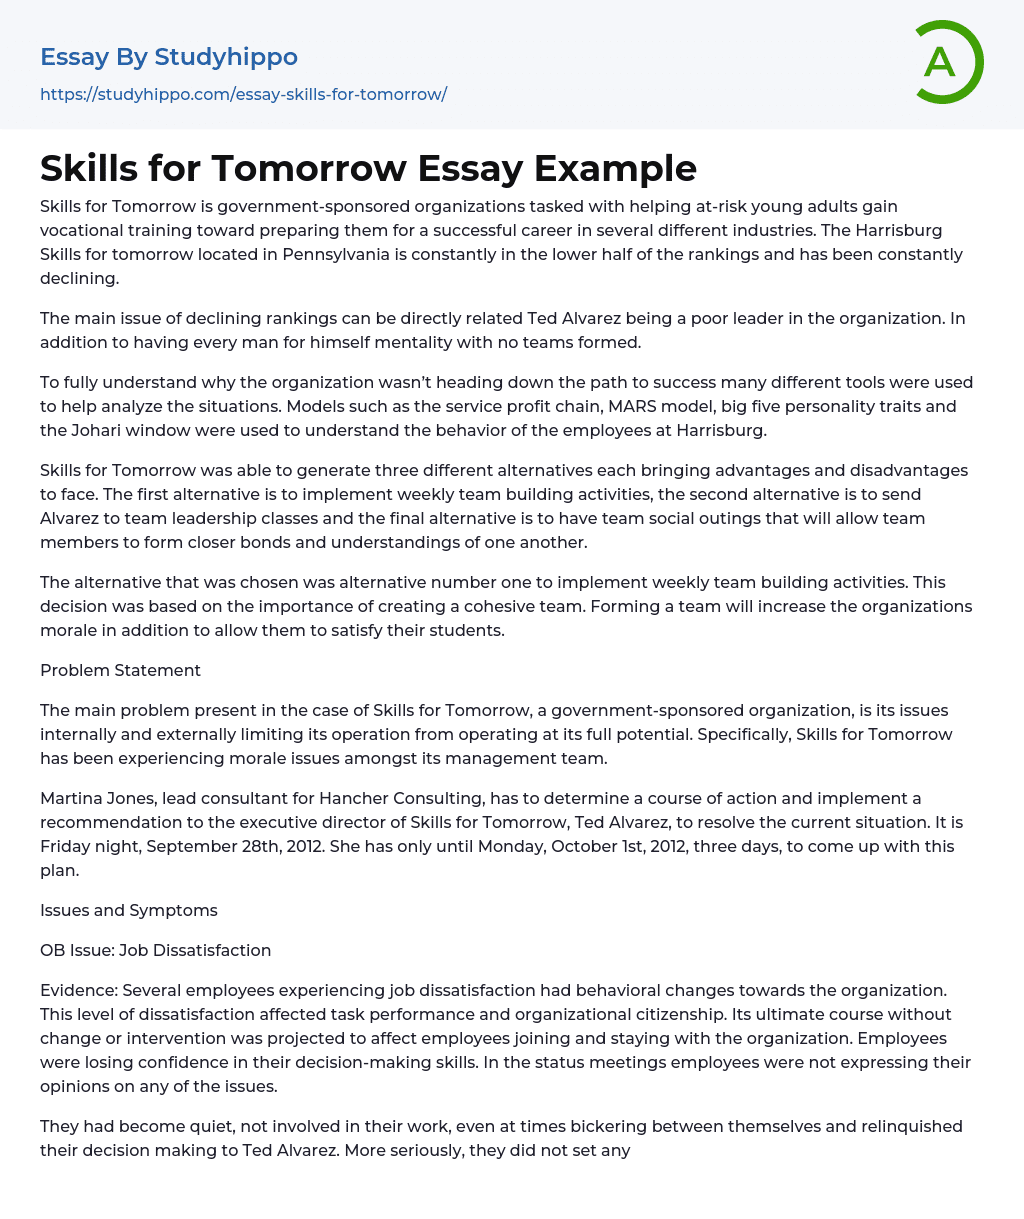 Skills for Tomorrow Essay Example